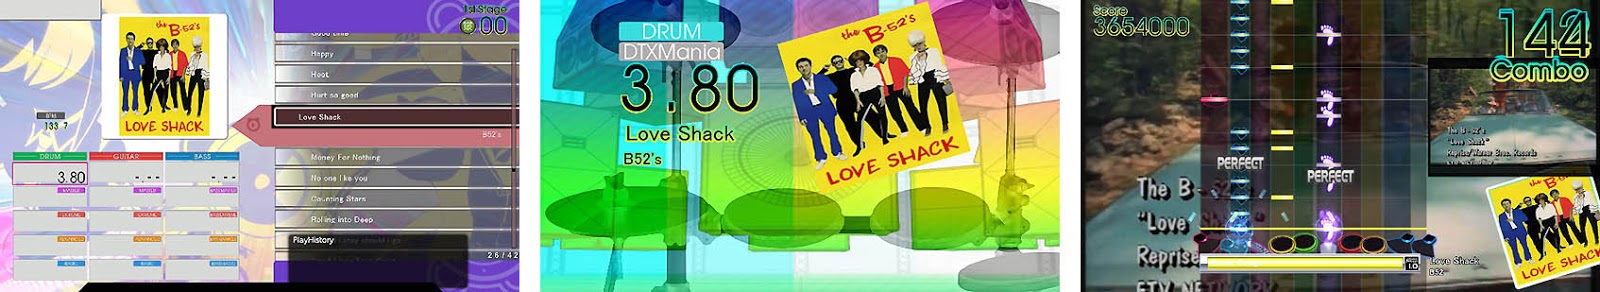 Song lyrics b52s love shack